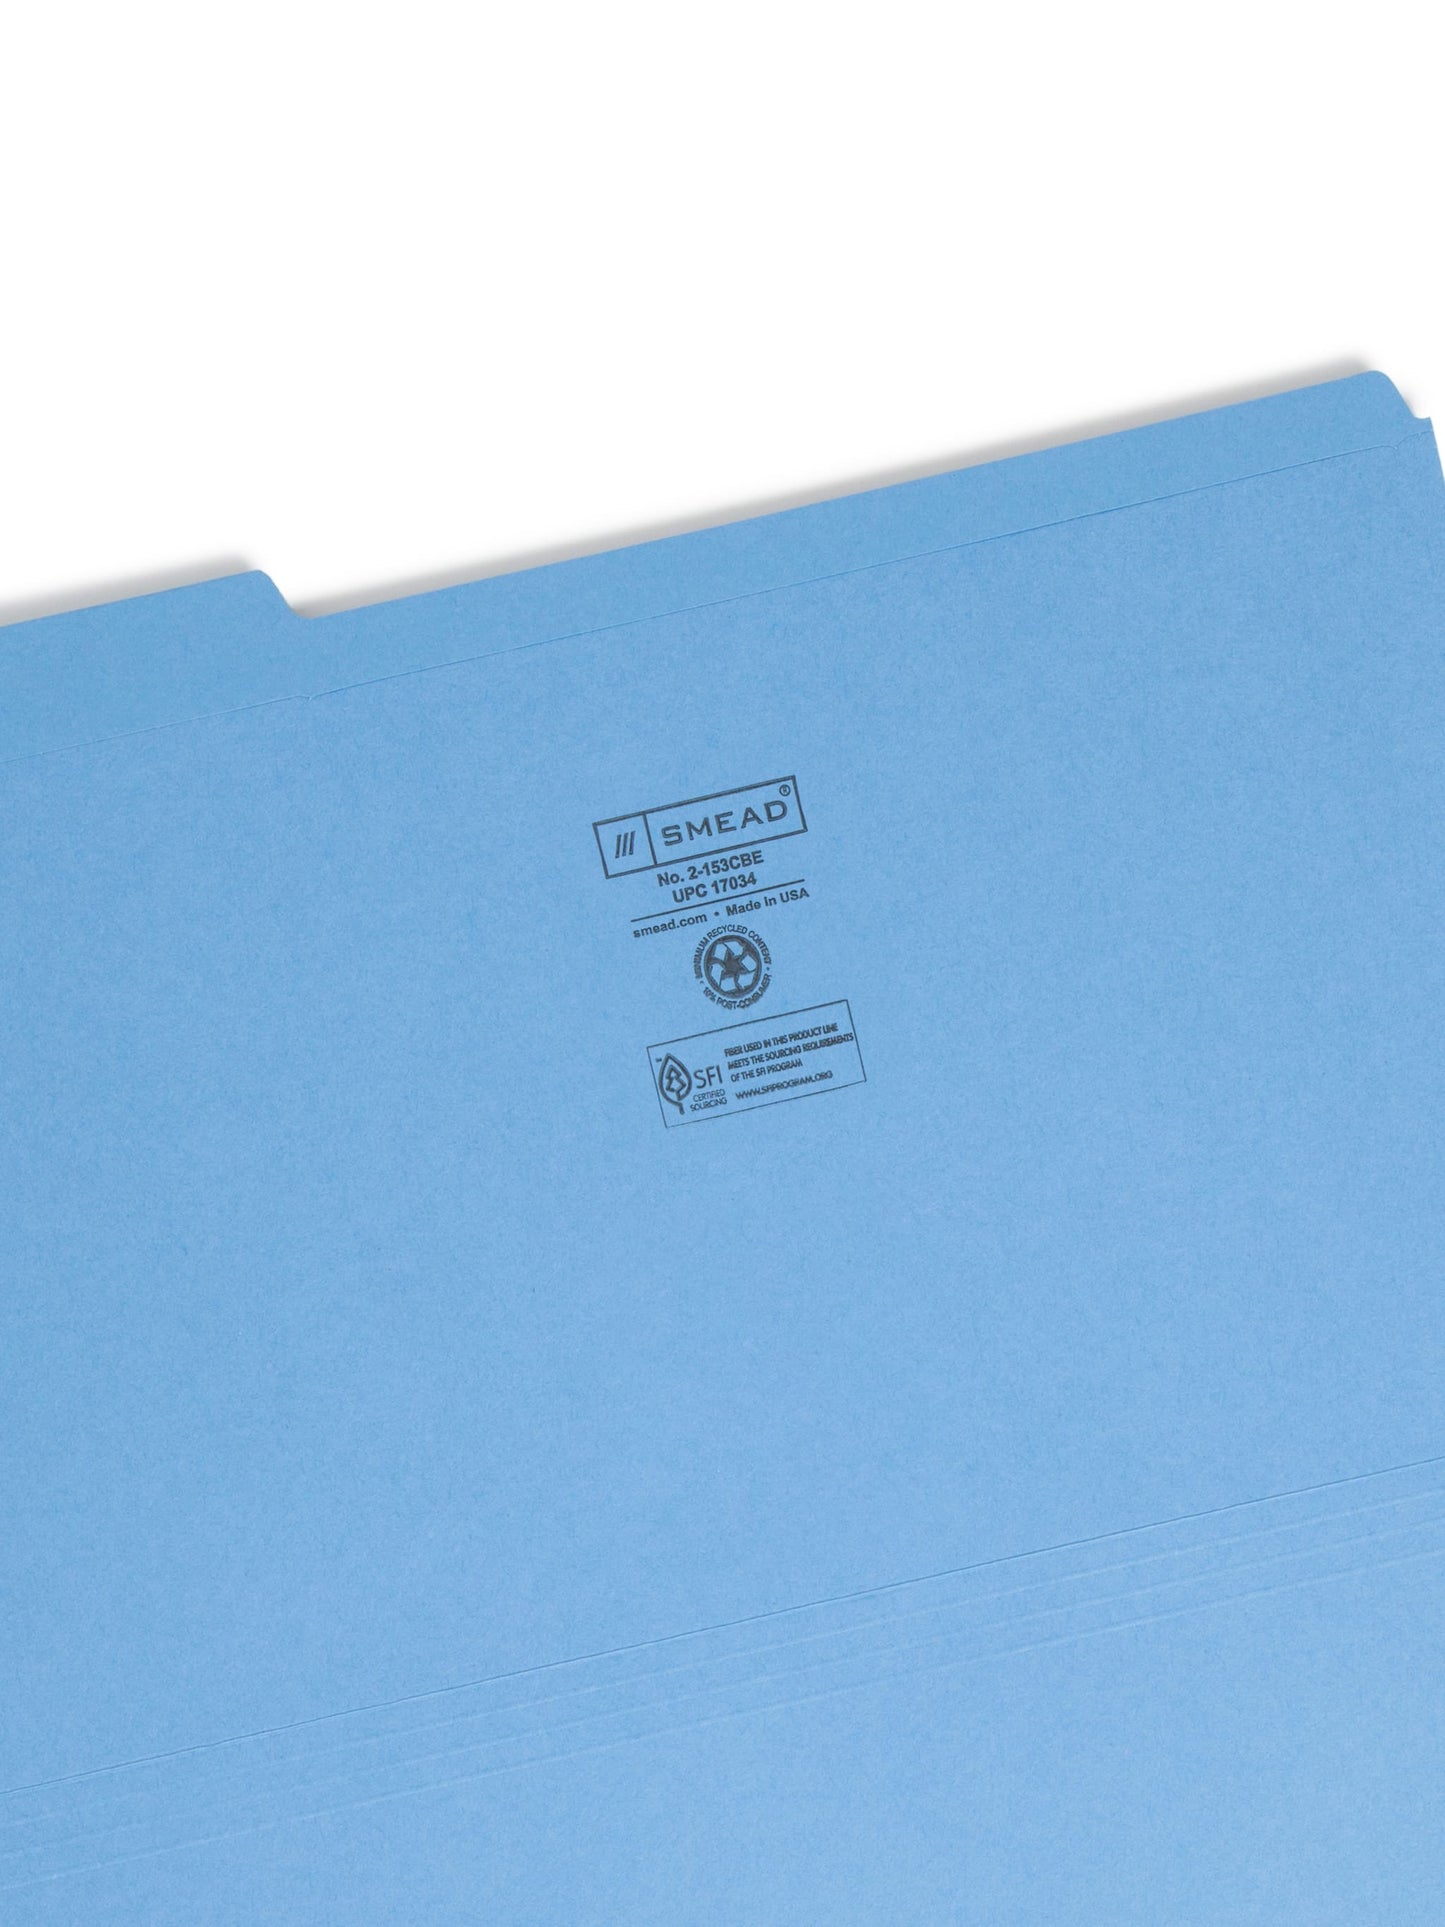 Reinforced Tab File Folders, 1/3-Cut Tab, Blue Color, Legal Size, Set of 100, 086486170345